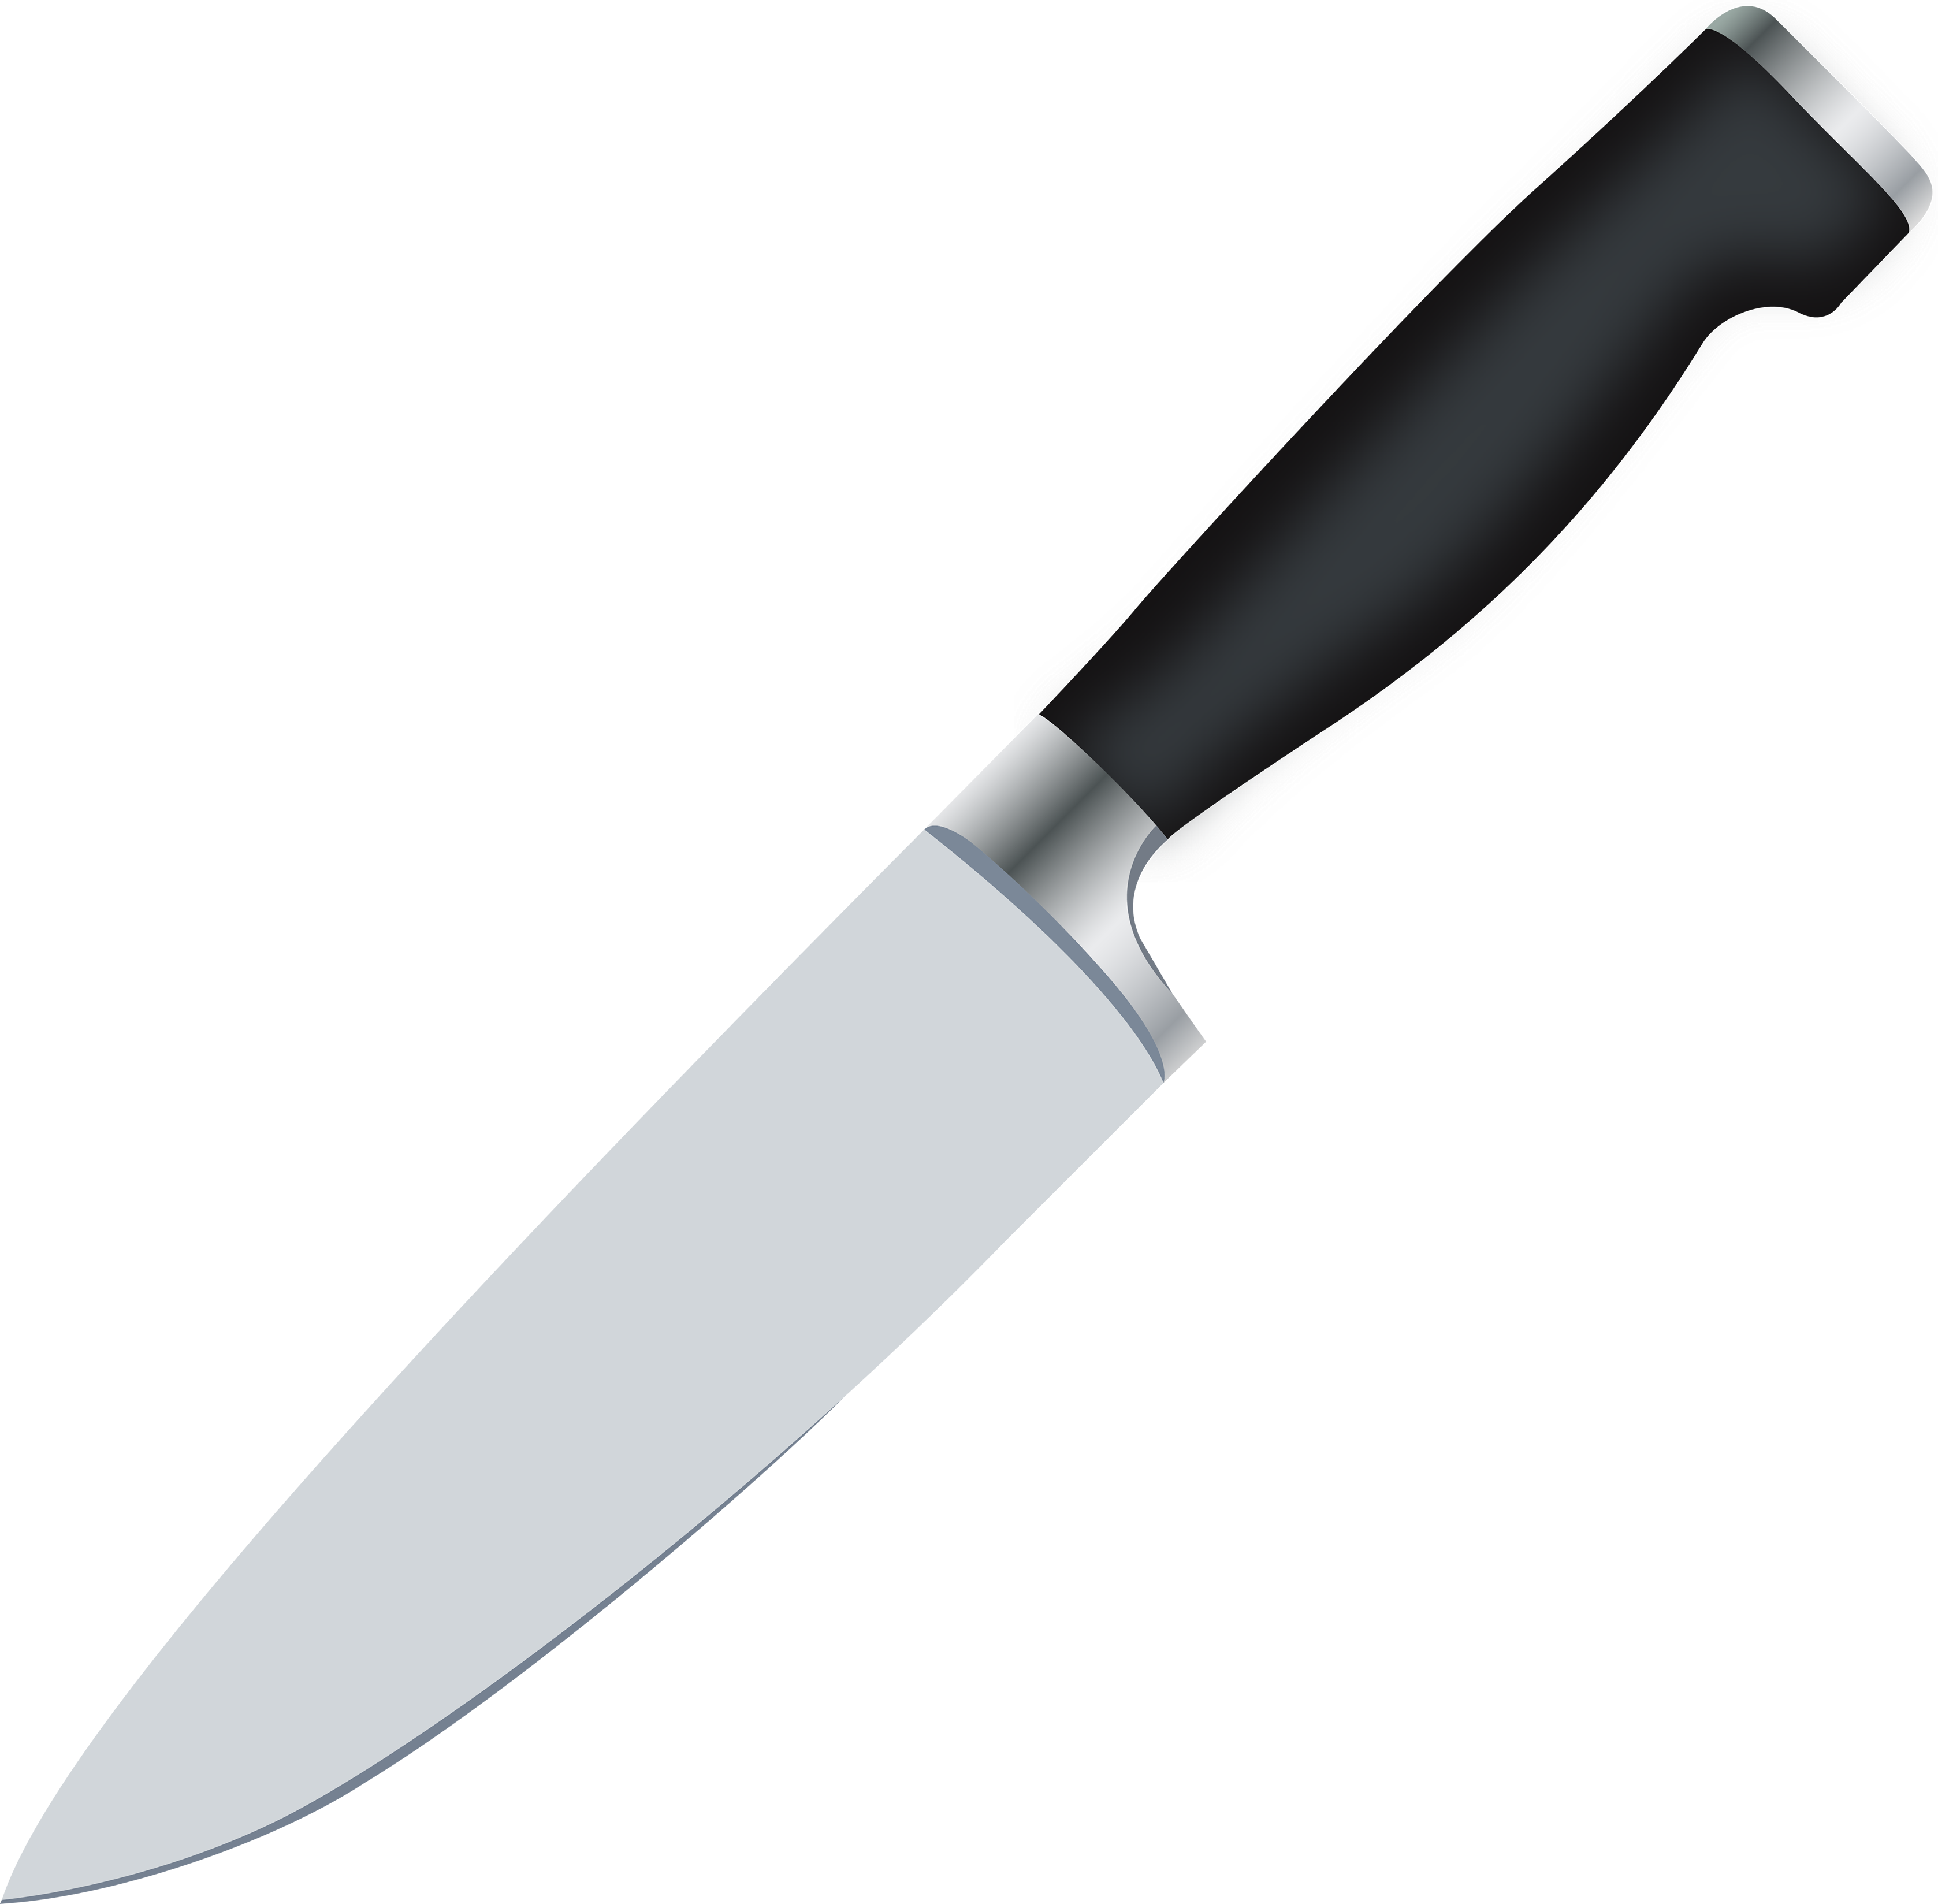 Knife png image purepng. Clipart kitchen modern